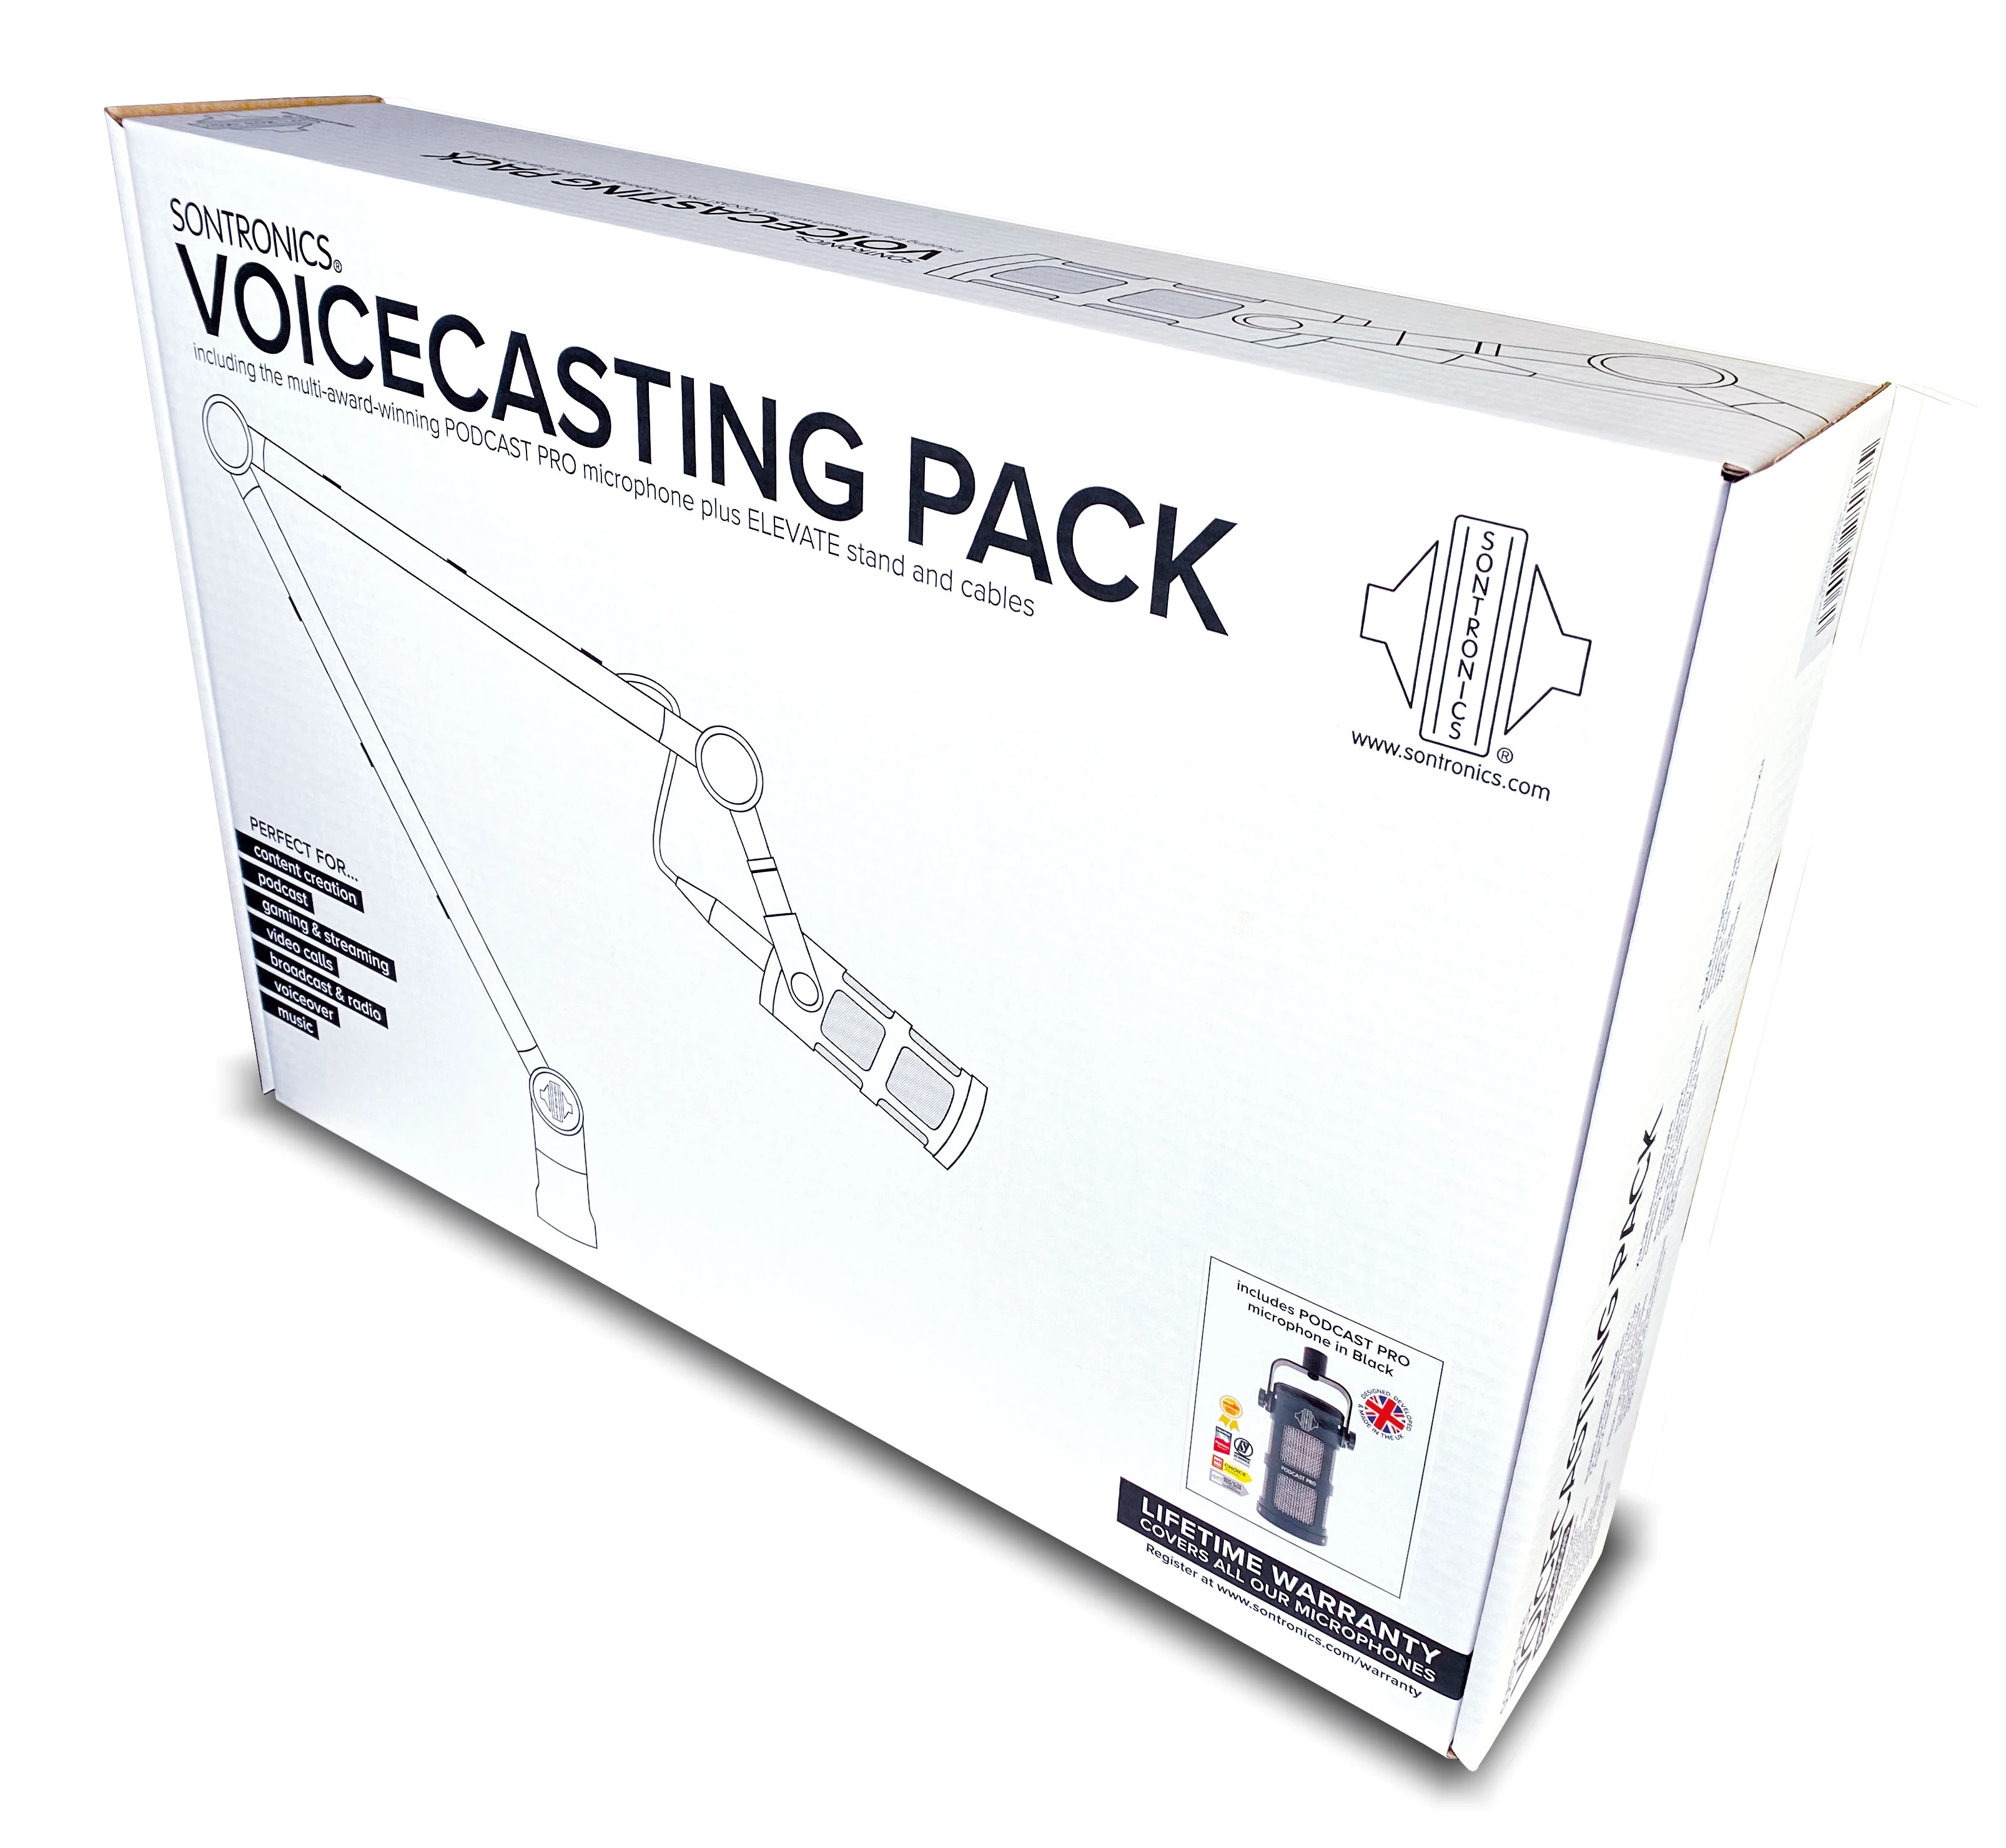 Sontronics Voicecasting Pack Black